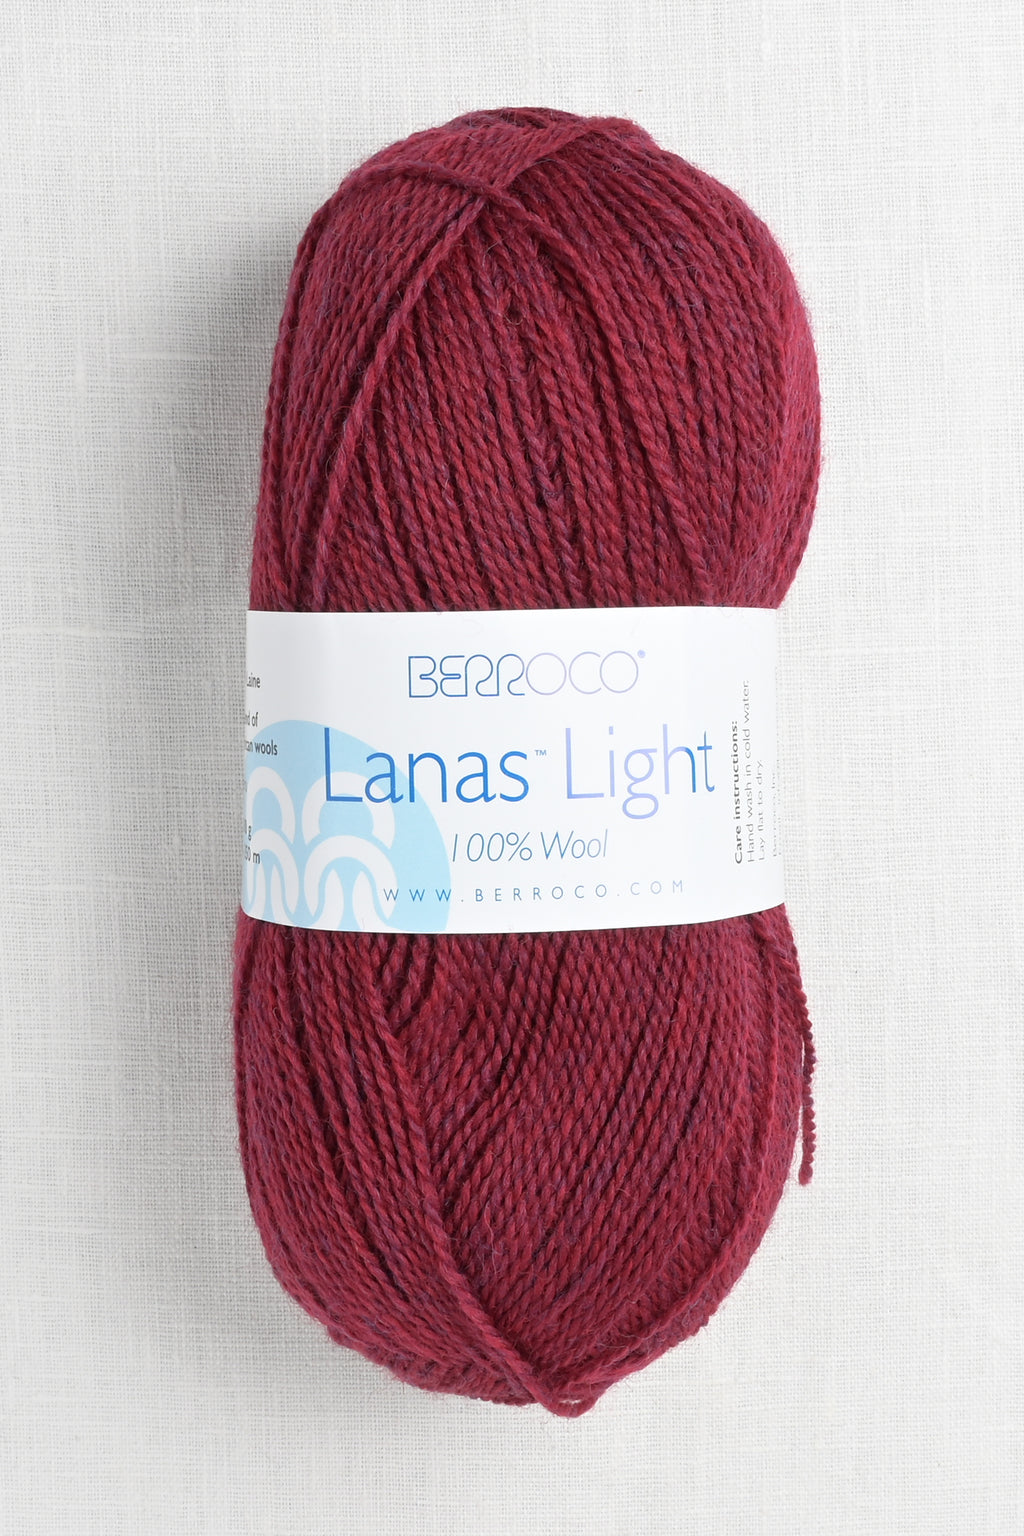 Berroco Lanas Light 78131 Raspberry